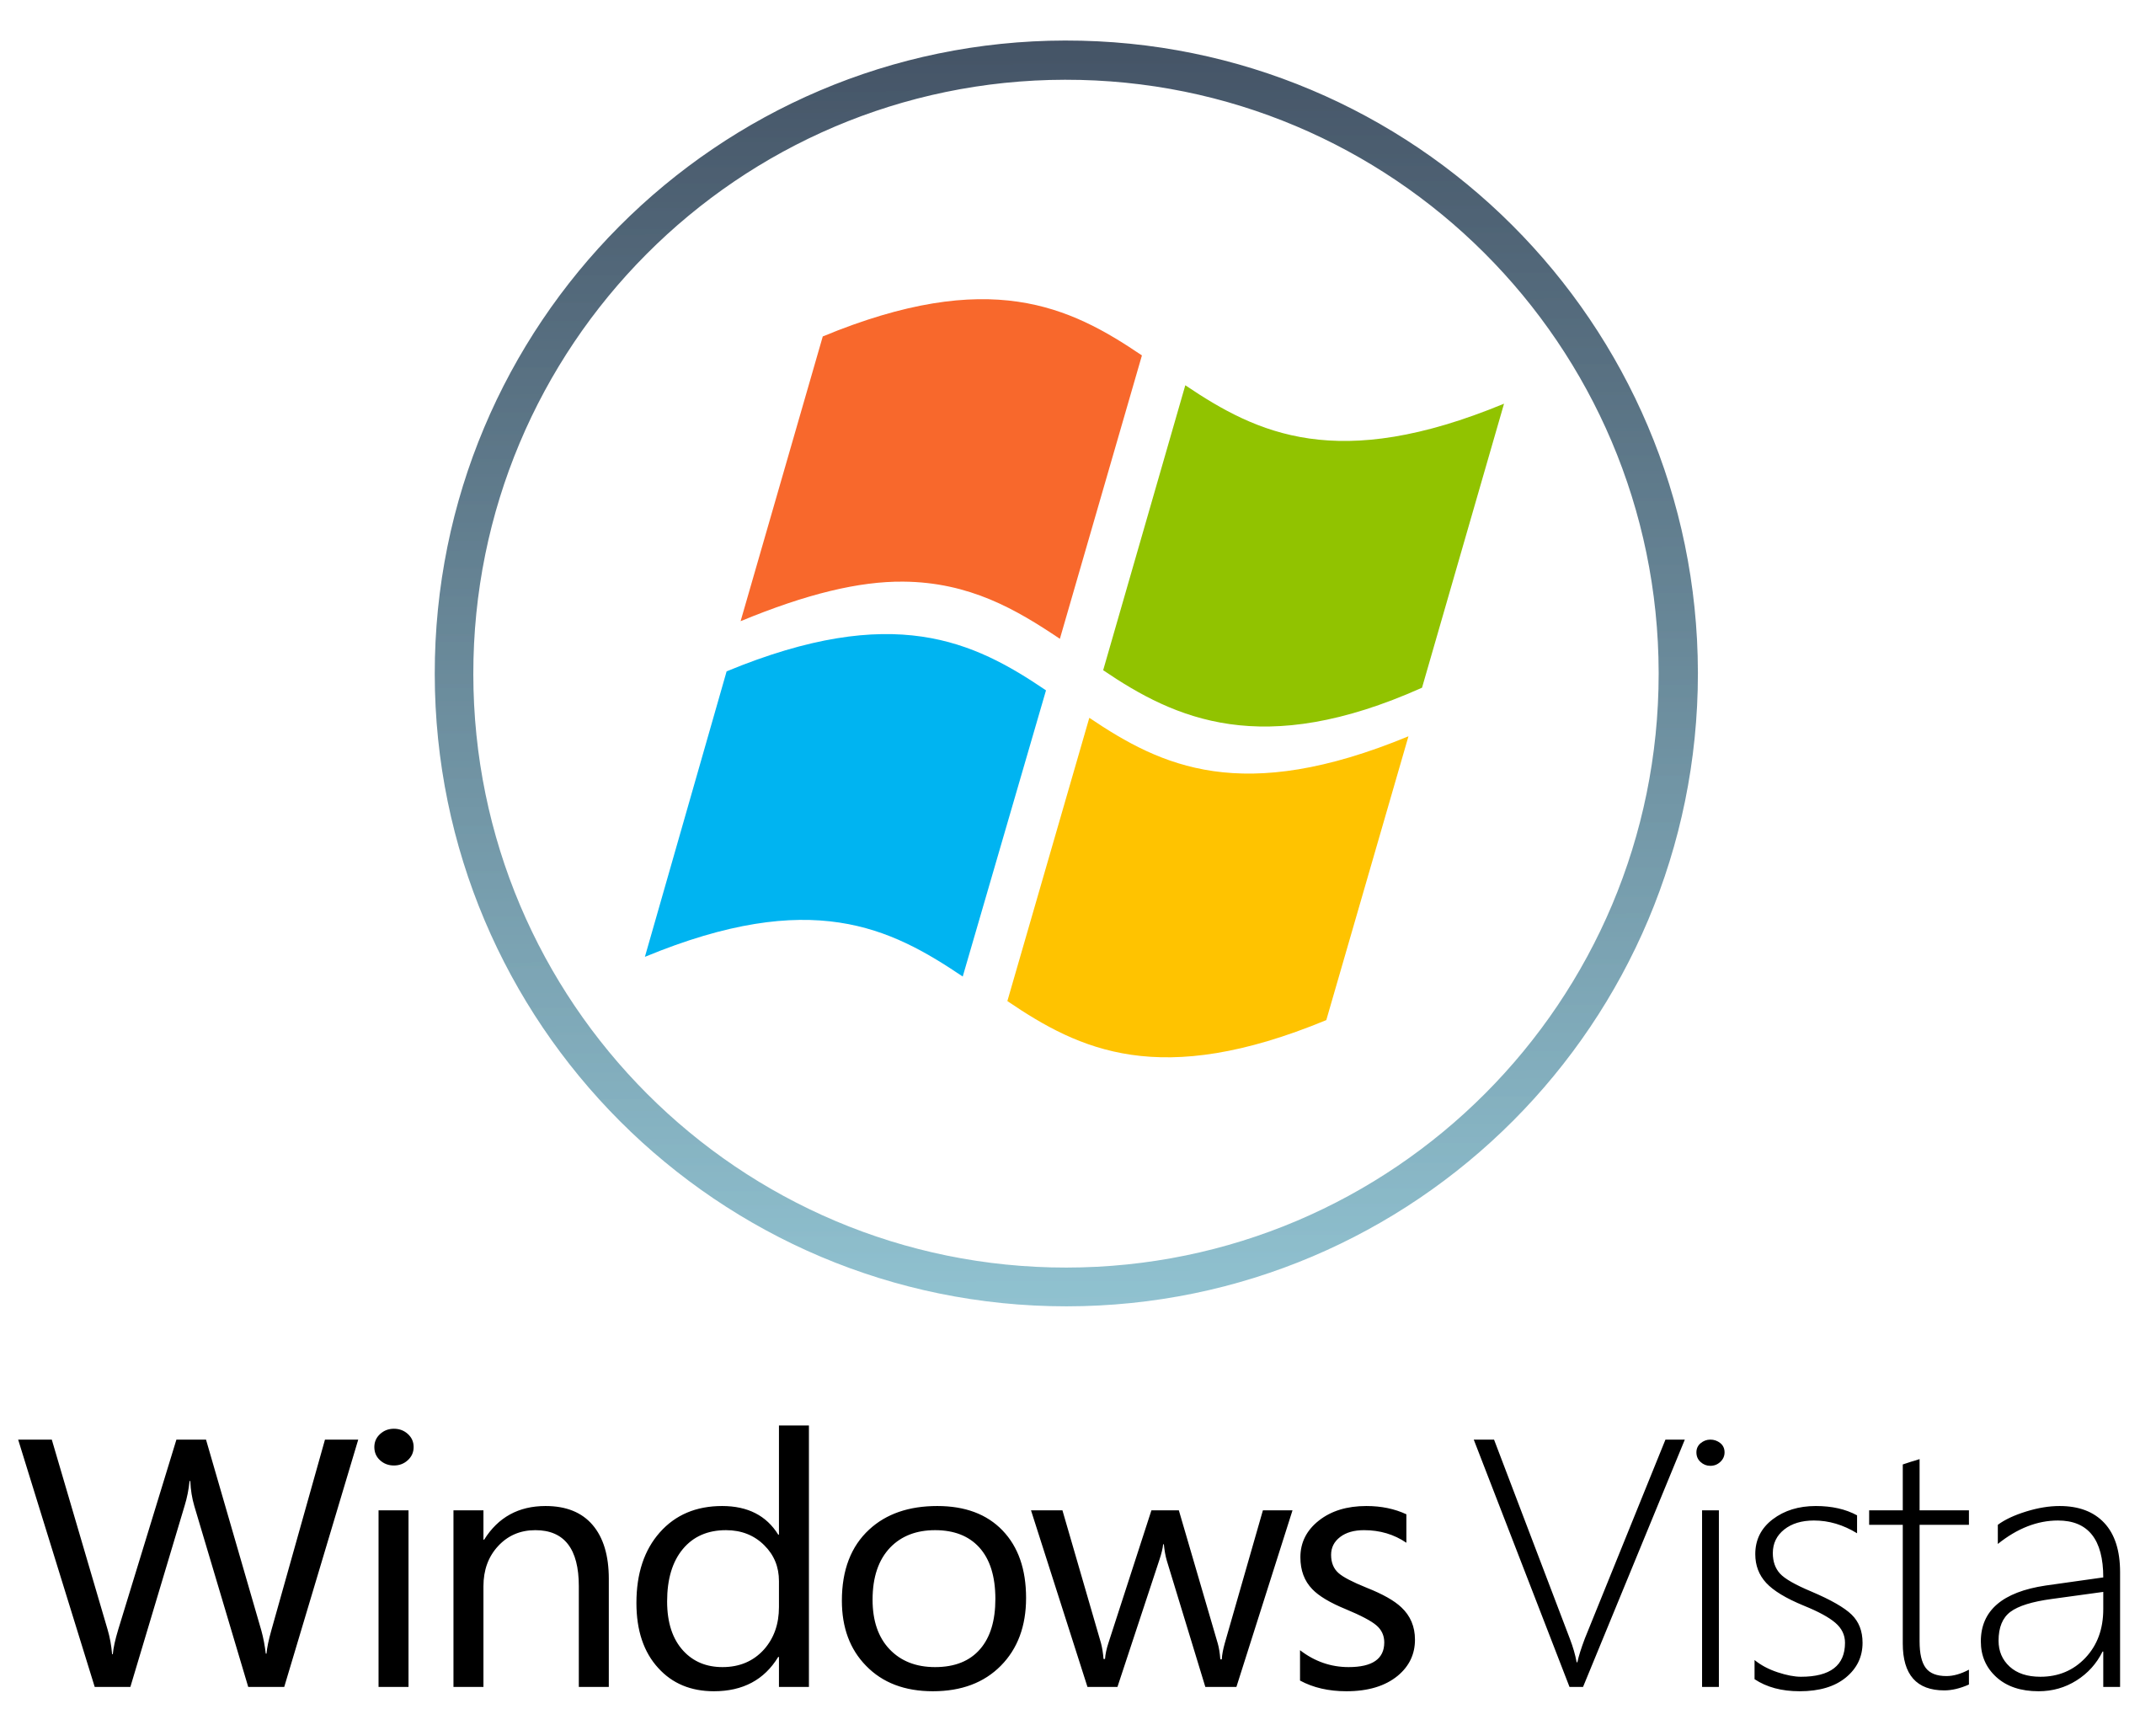 Windows Vista - Wikipedia